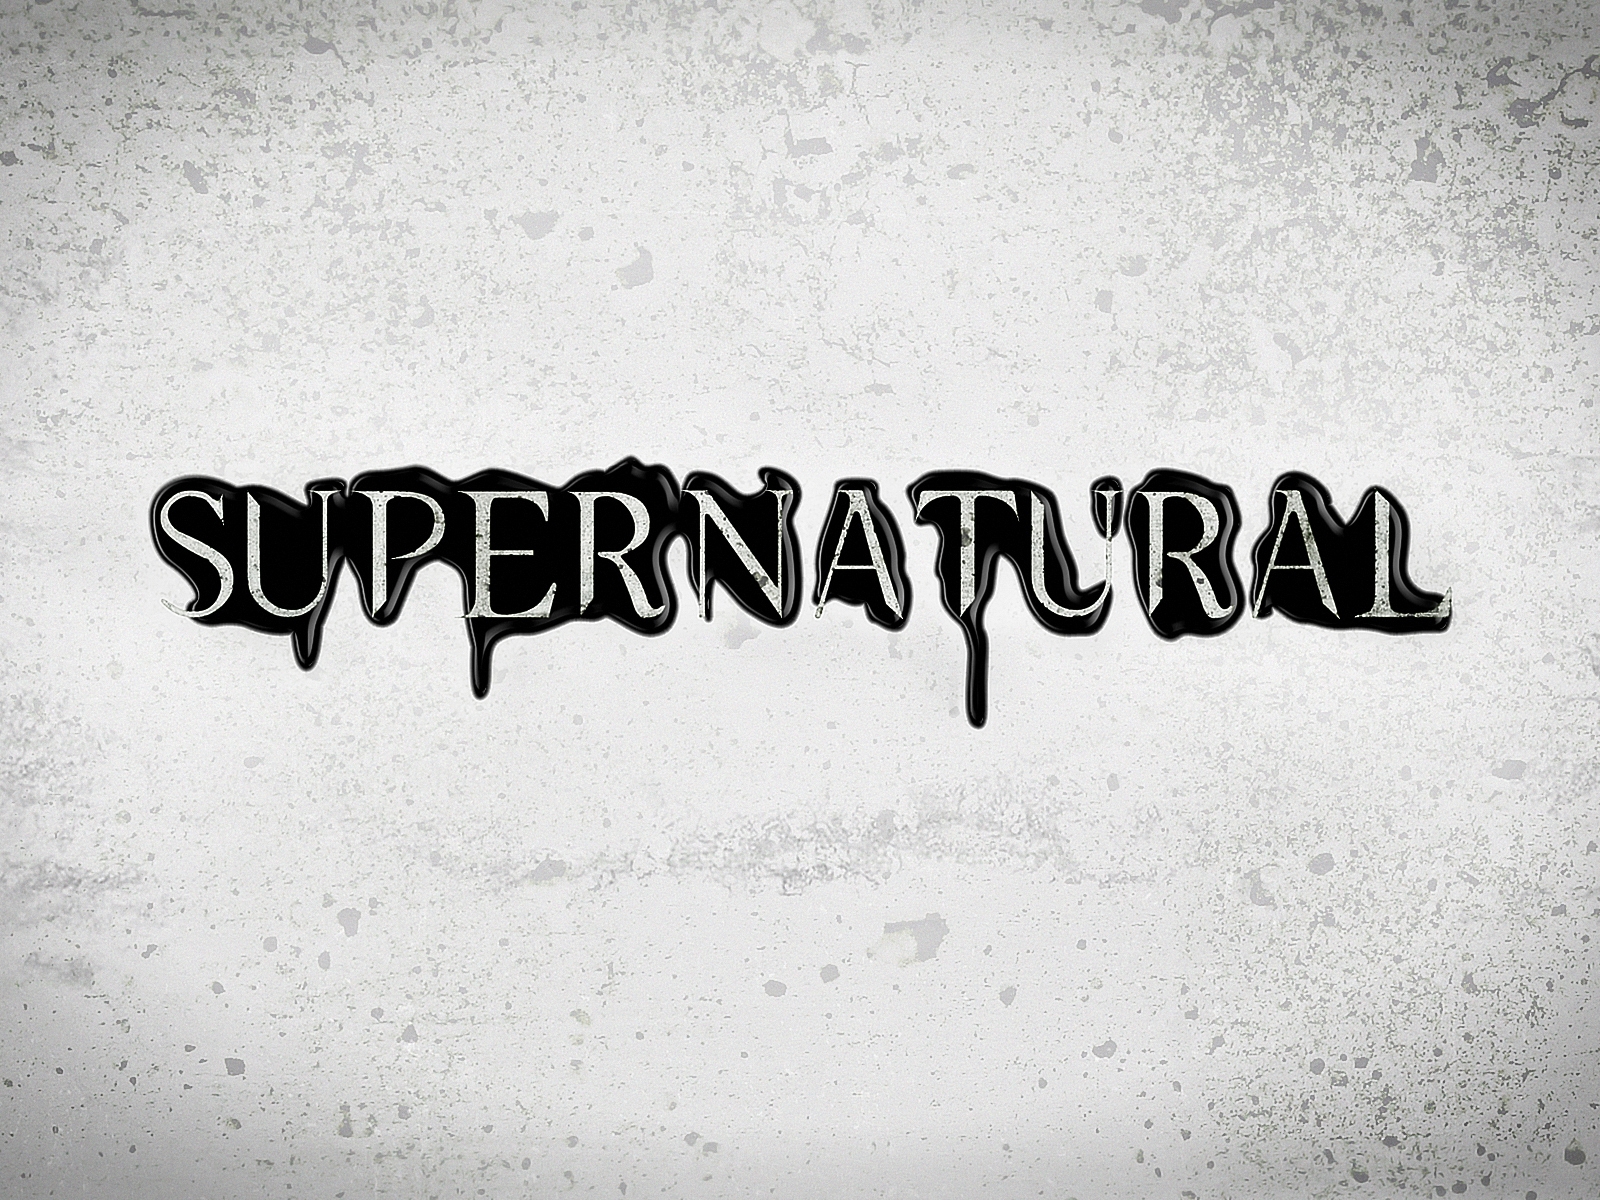 Supernatural Season 7 for 1600 x 1200 resolution